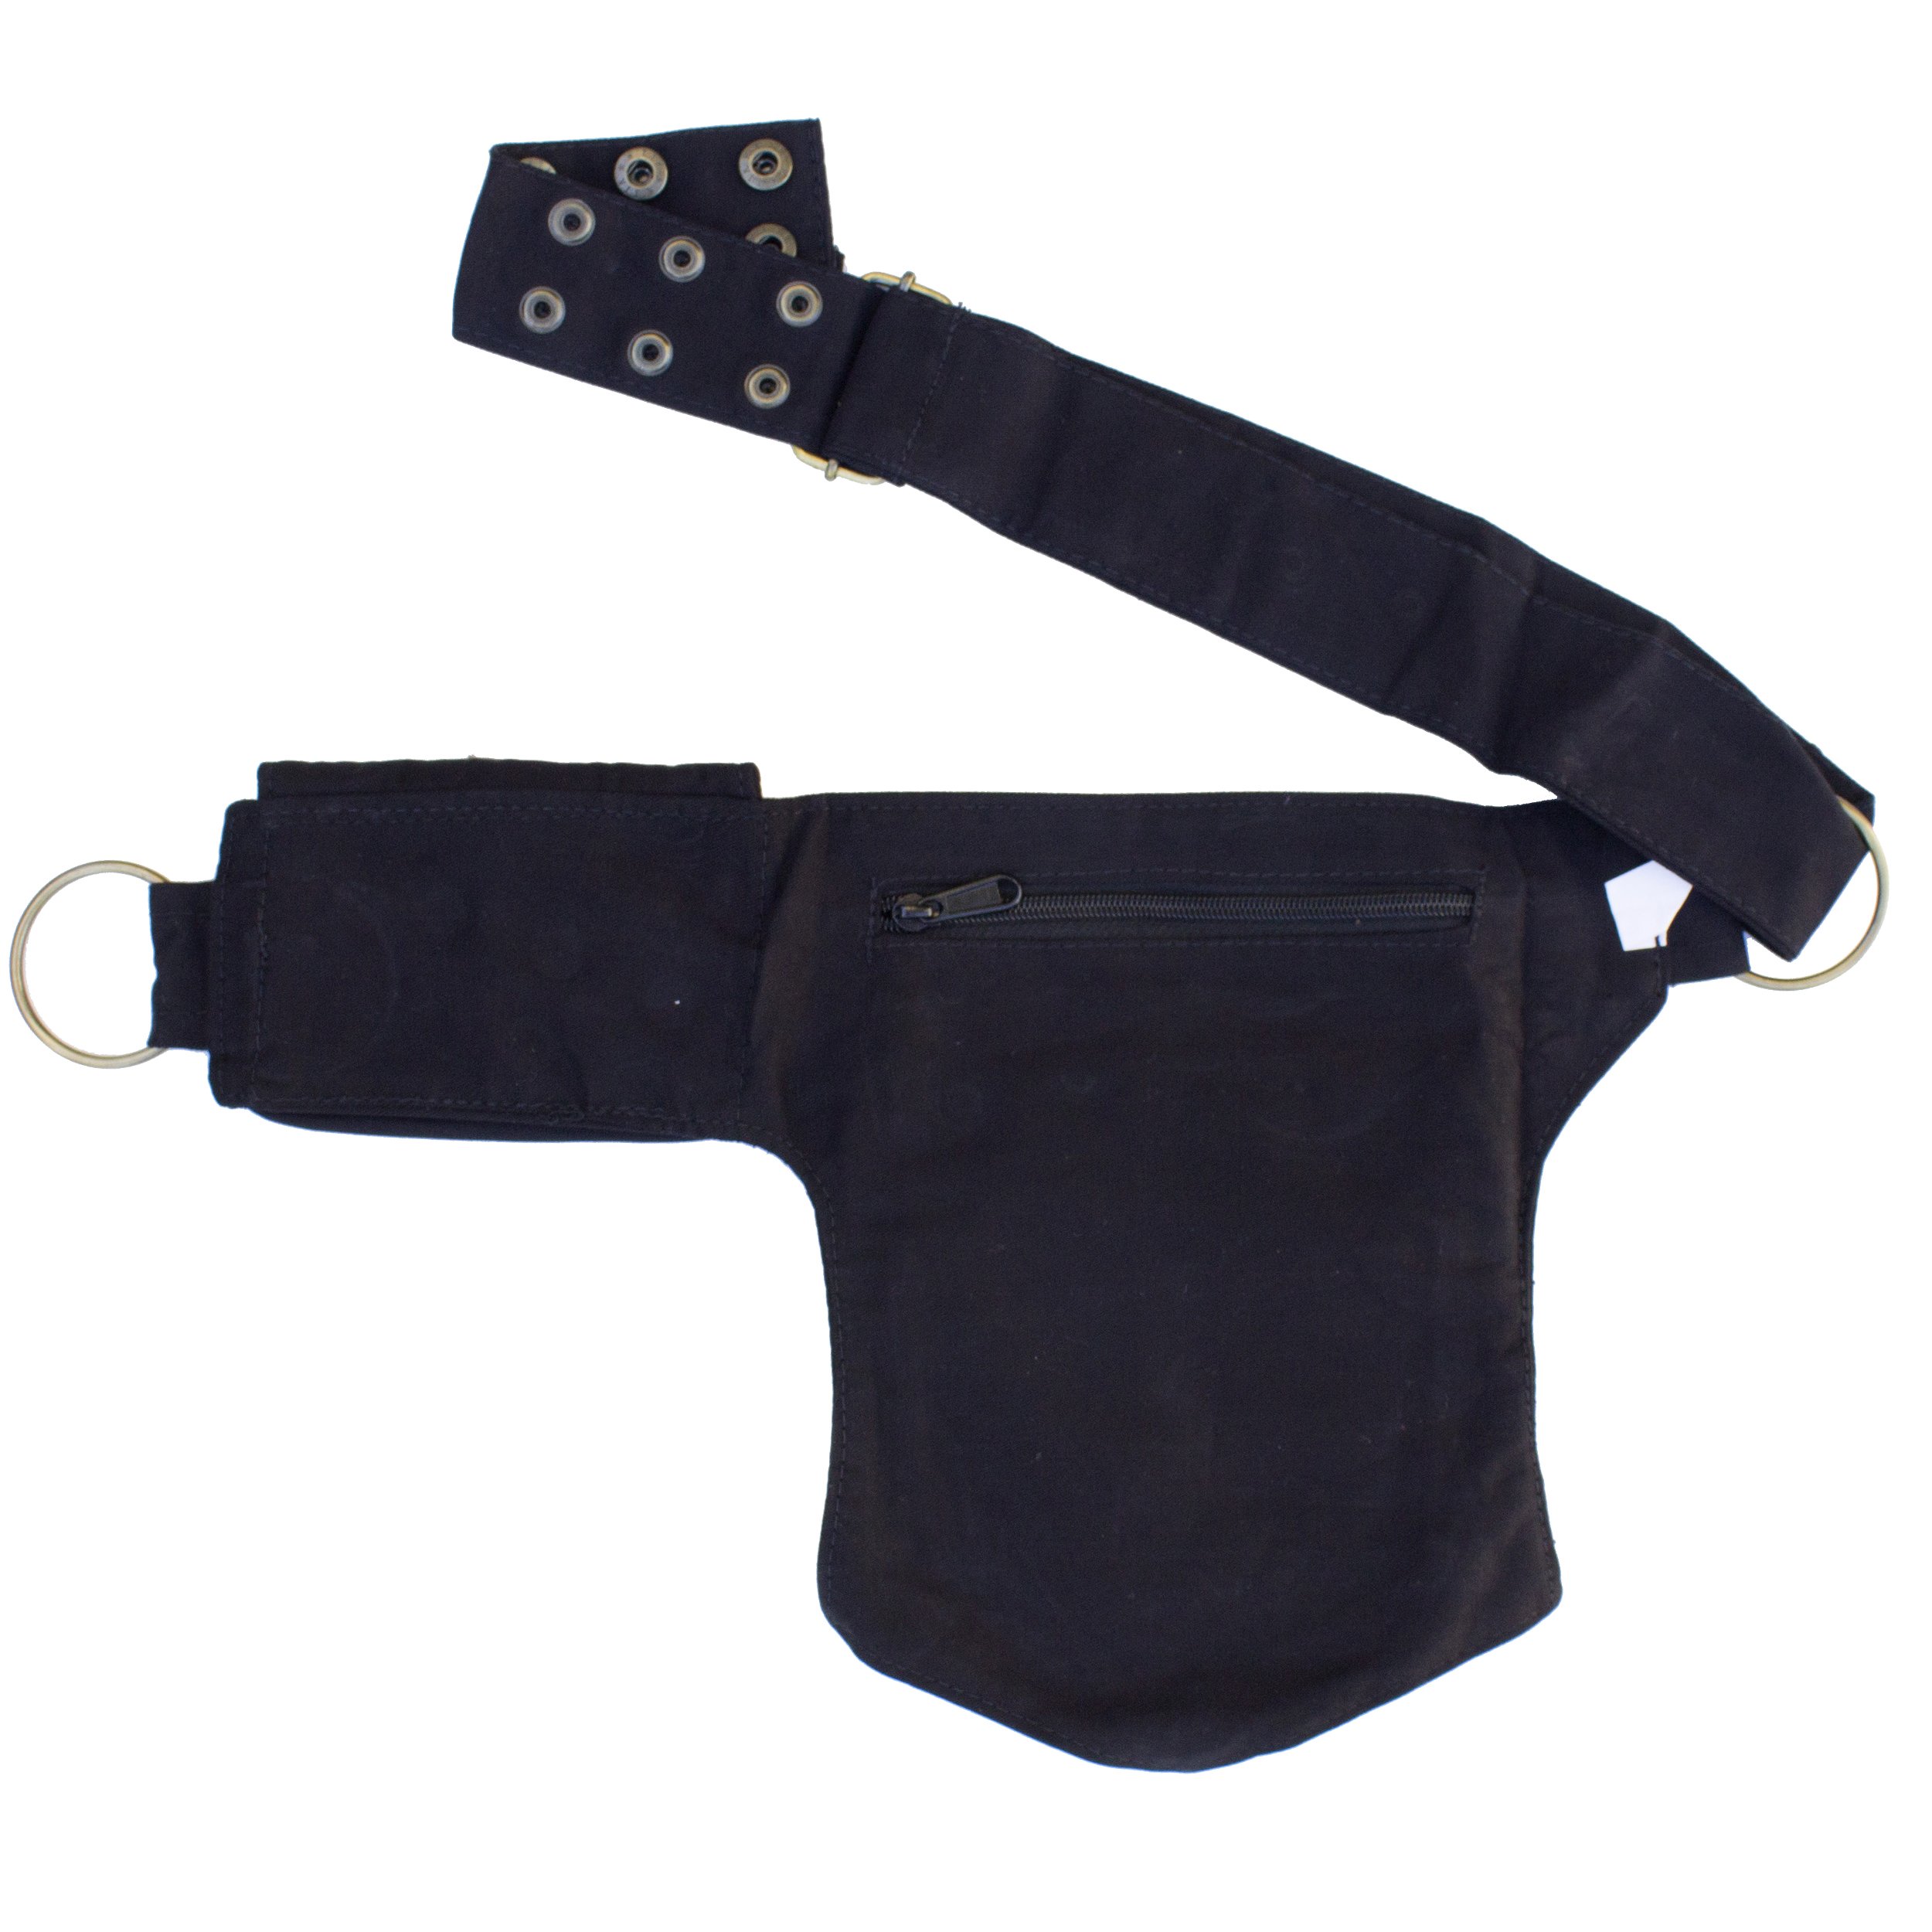 Cotton Practical Fannypack Waistbag Travel Utility Belt-Black